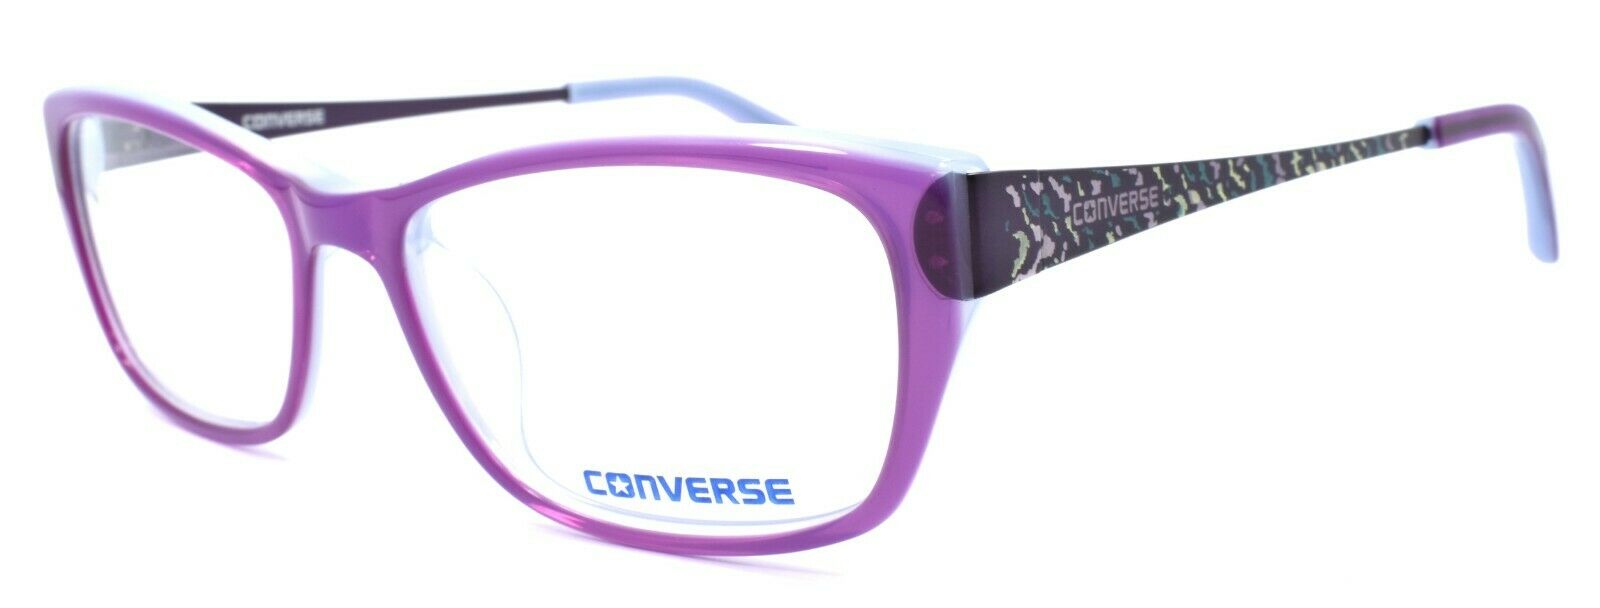 1-CONVERSE Q020 UF Women's Eyeglasses Frames 51-15-135 Purple + CASE-751286264968-IKSpecs